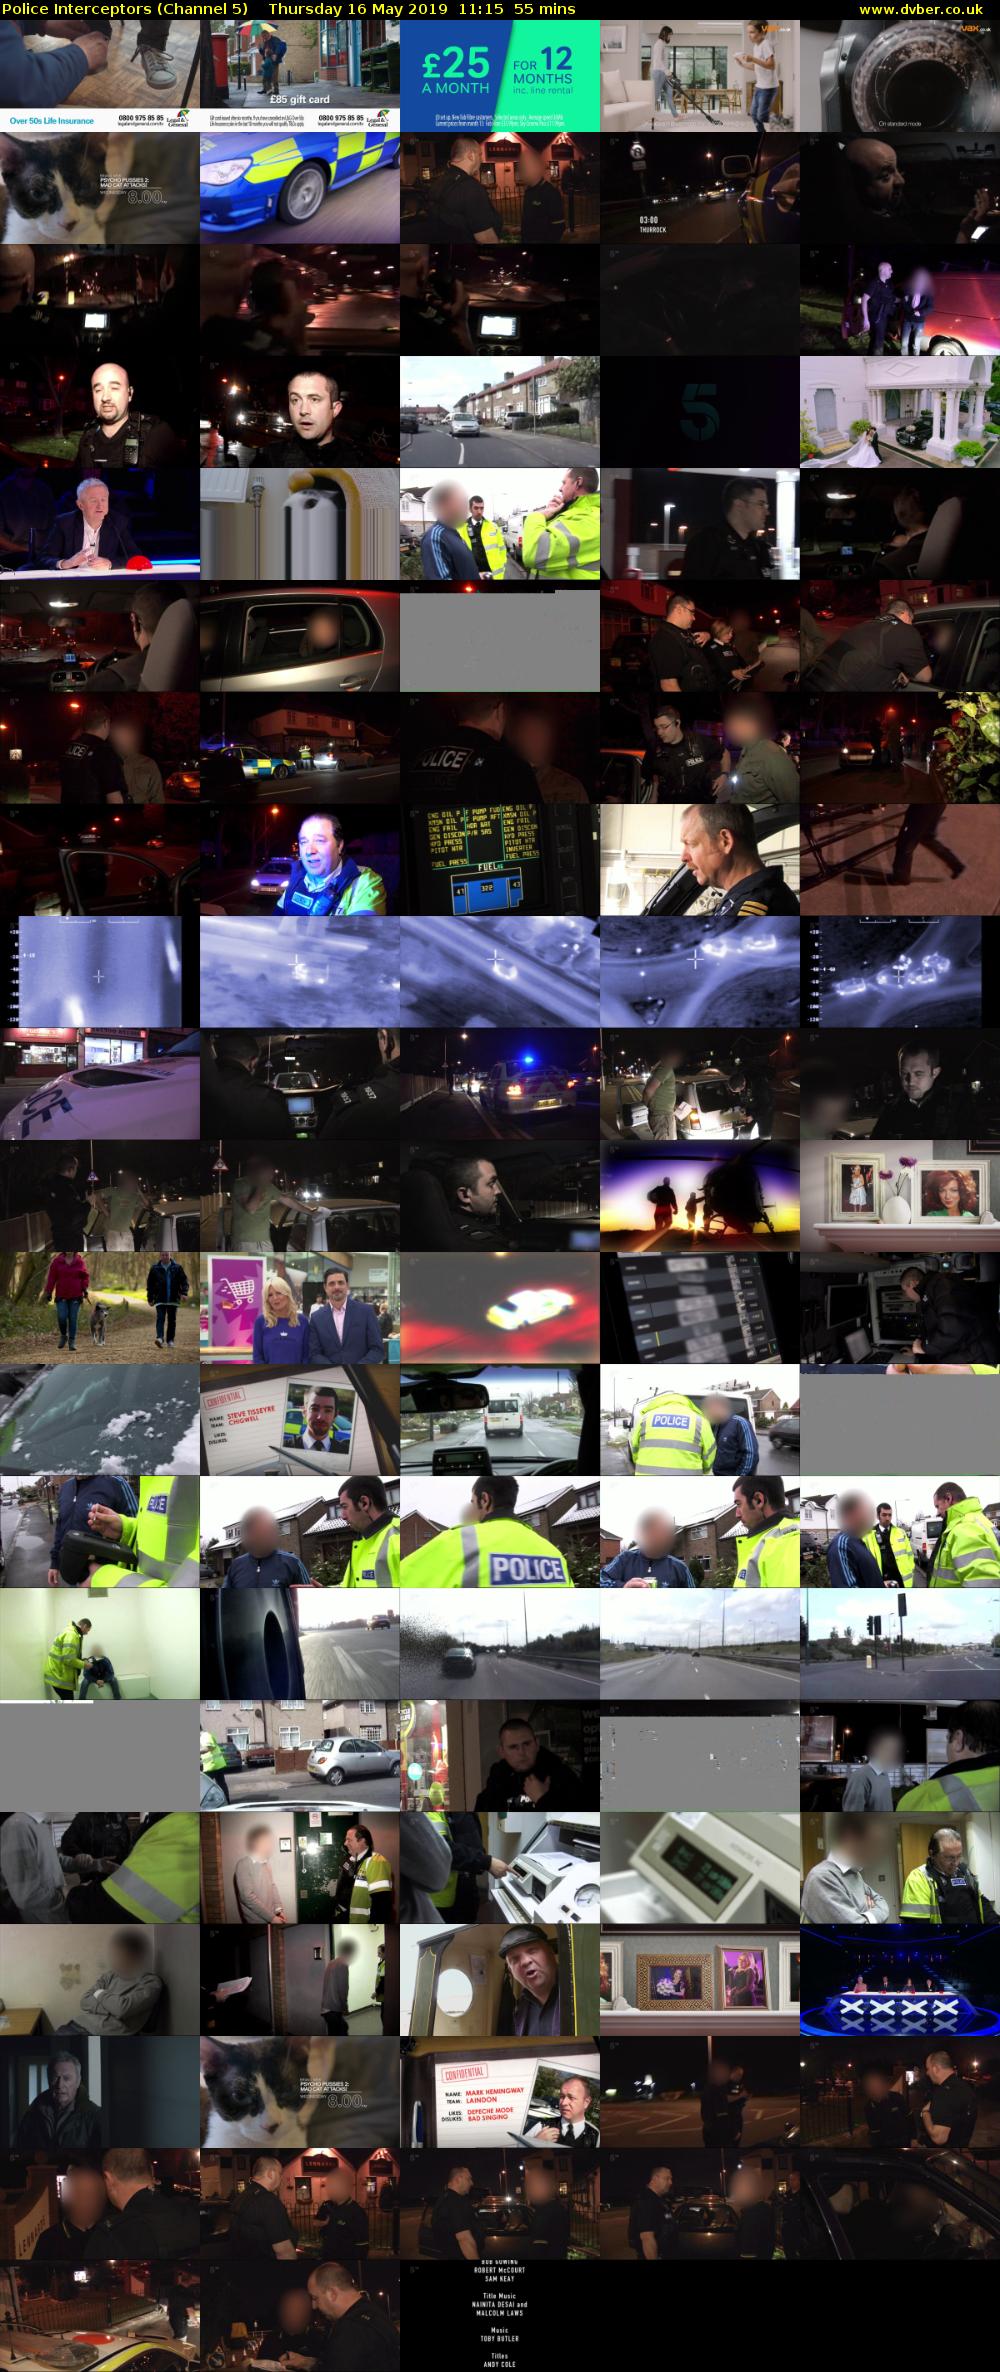 Police Interceptors (Channel 5) Thursday 16 May 2019 11:15 - 12:10